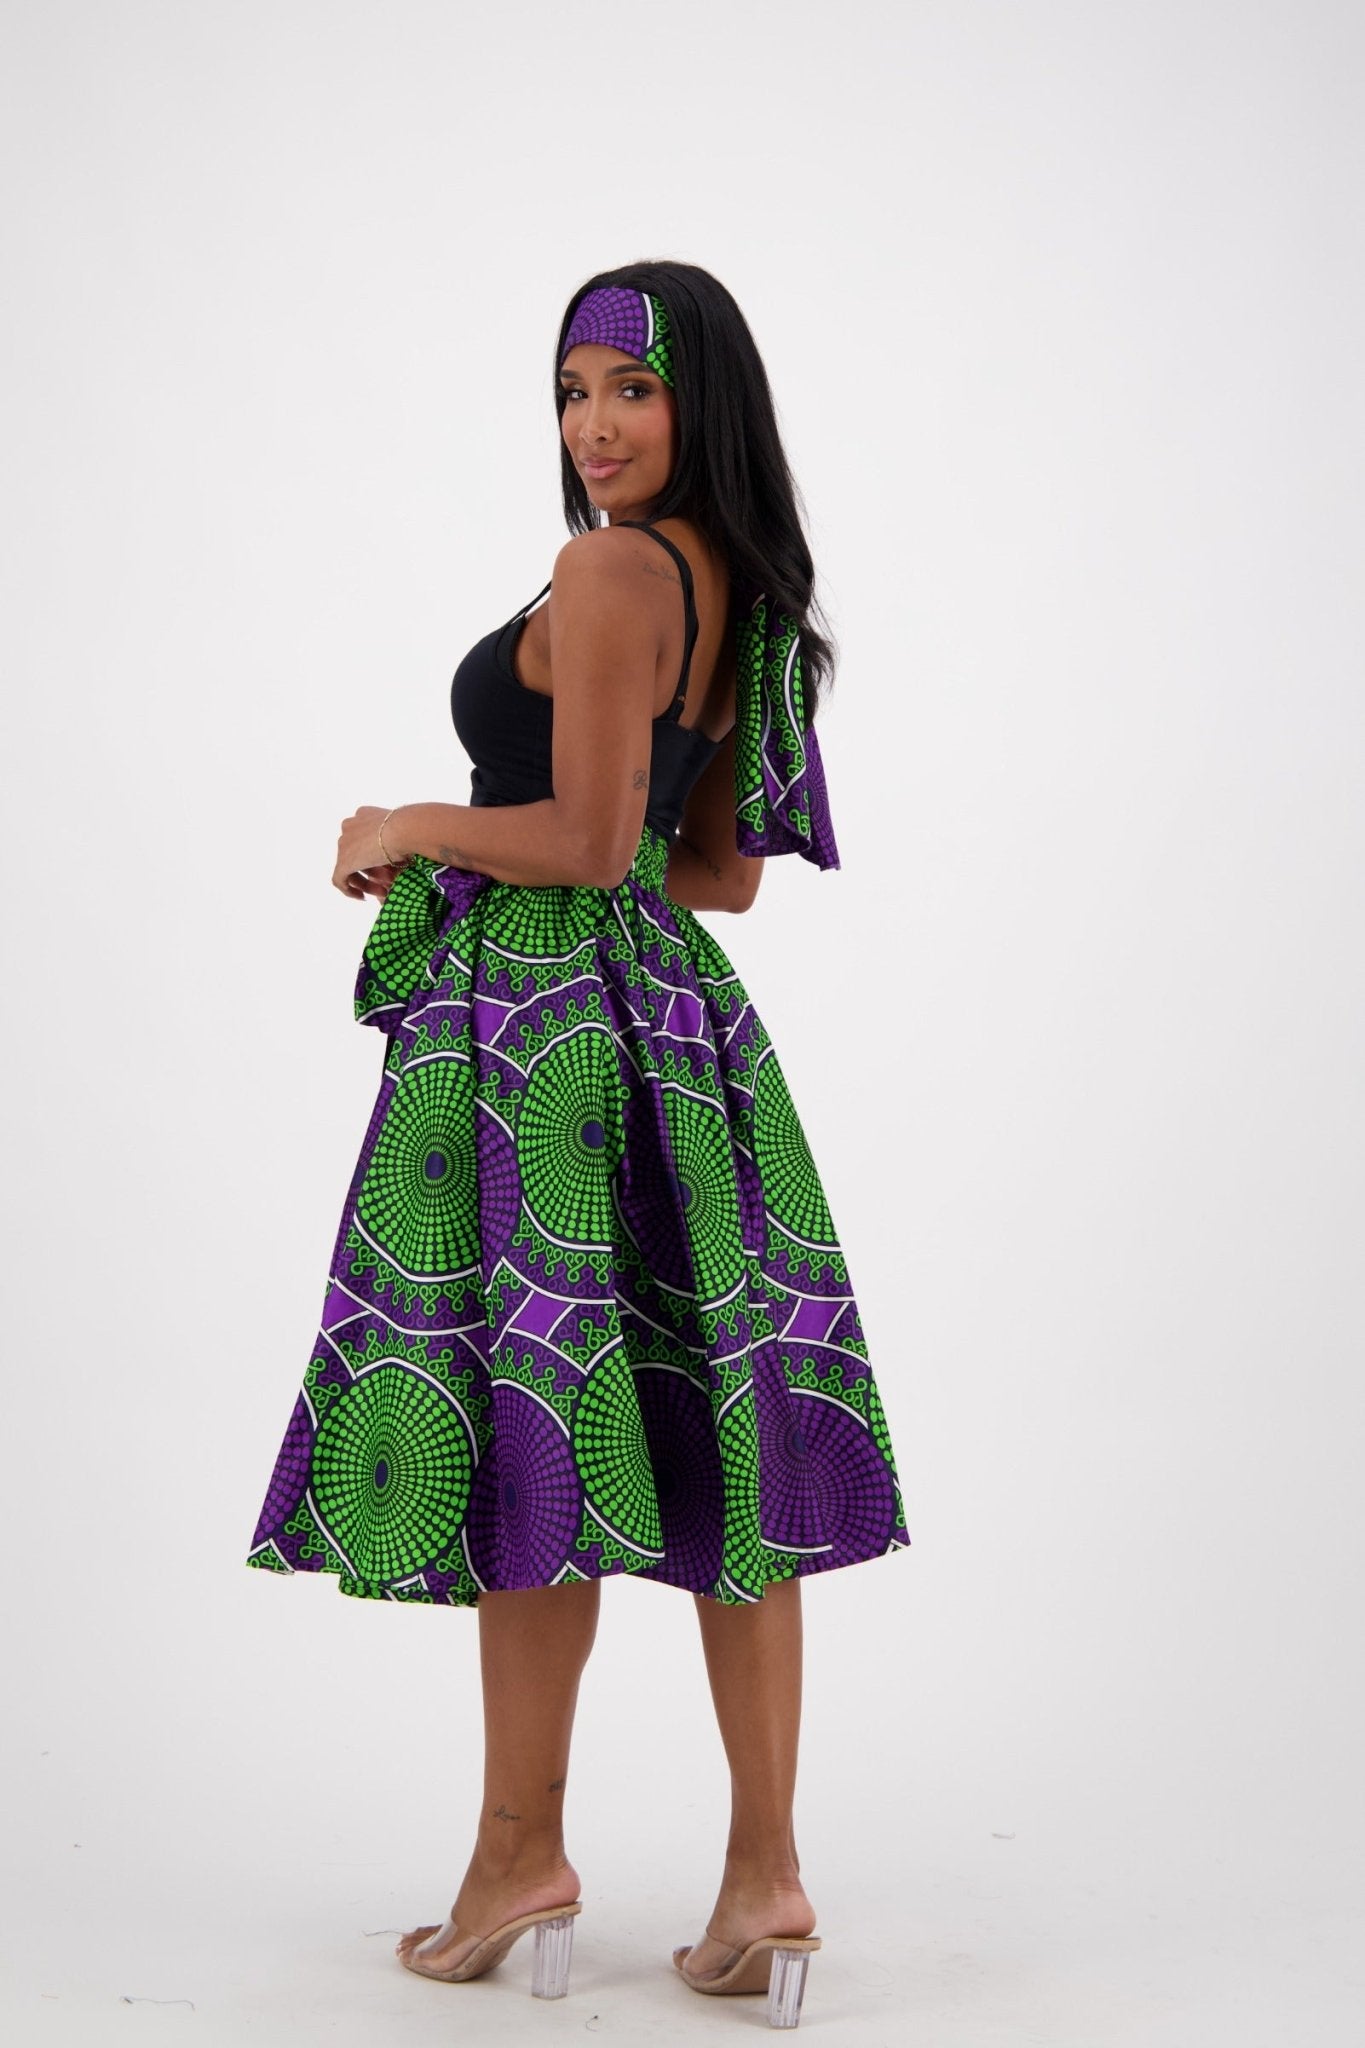 Mid-Length African Print Skirt 16321-237 - Advance Apparels Inc